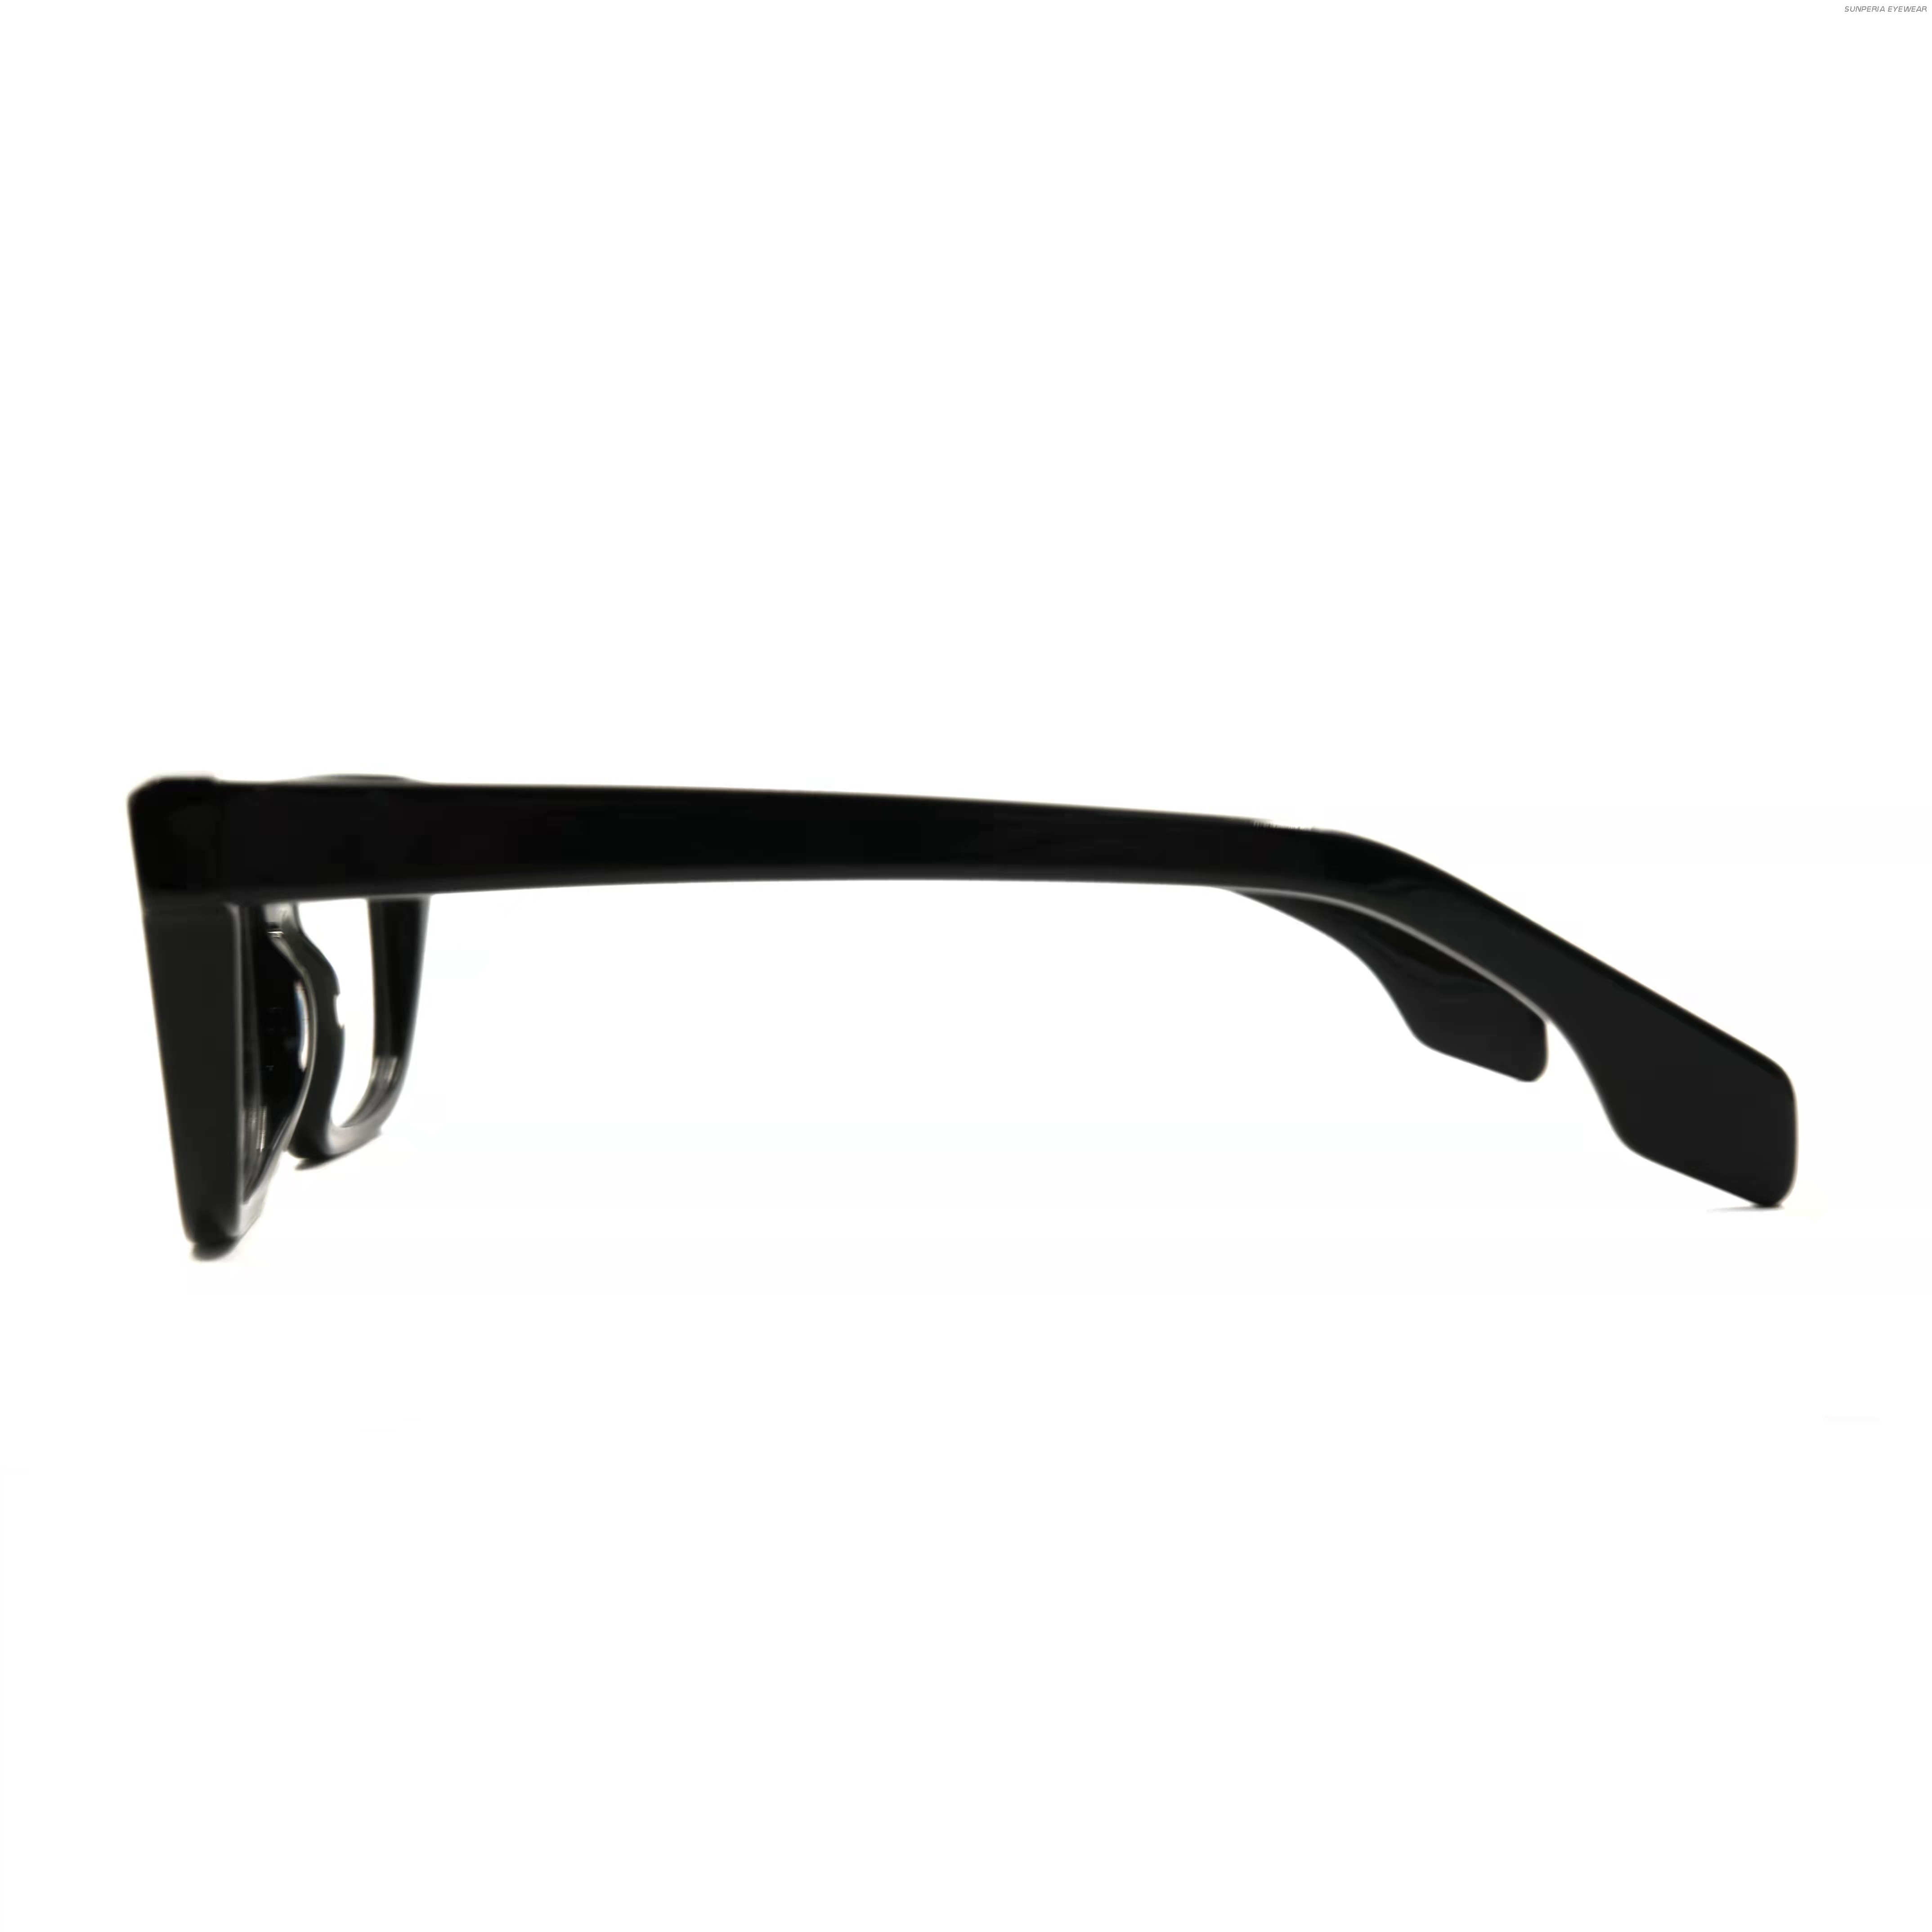 Eyewear Frames Manufacturers Square Optical Frames Black Acetate Spectacle Frame Suppliers